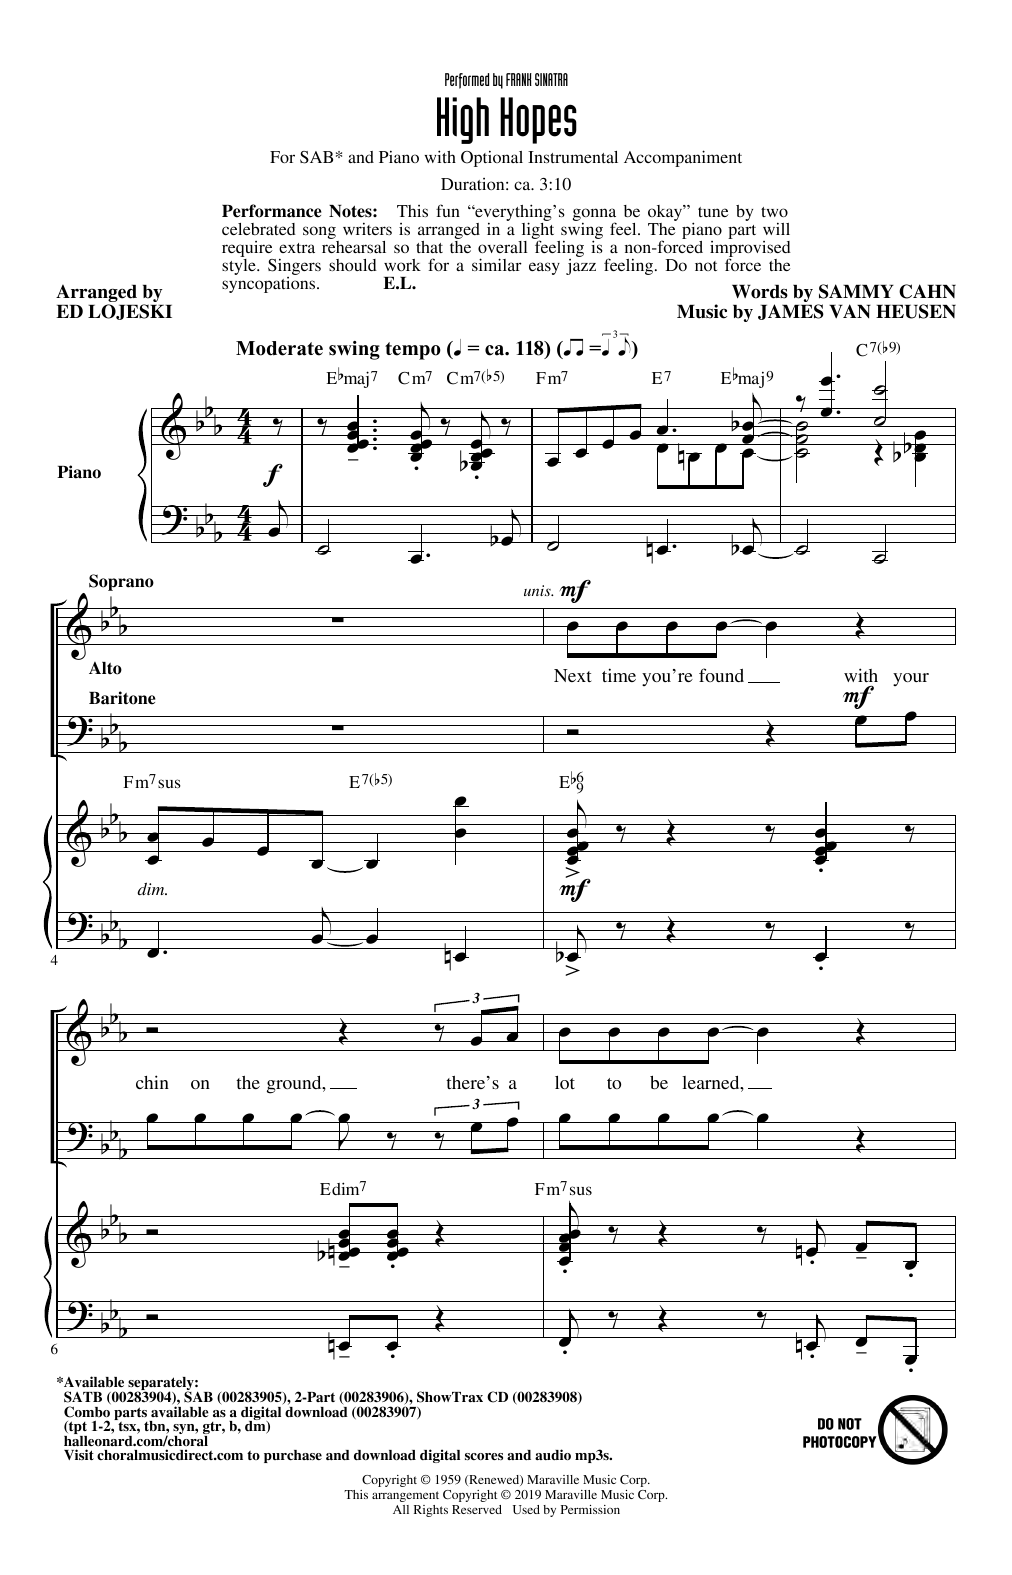 Frank Sinatra High Hopes (arr. Ed Lojeski) Sheet Music Notes & Chords for 2-Part Choir - Download or Print PDF